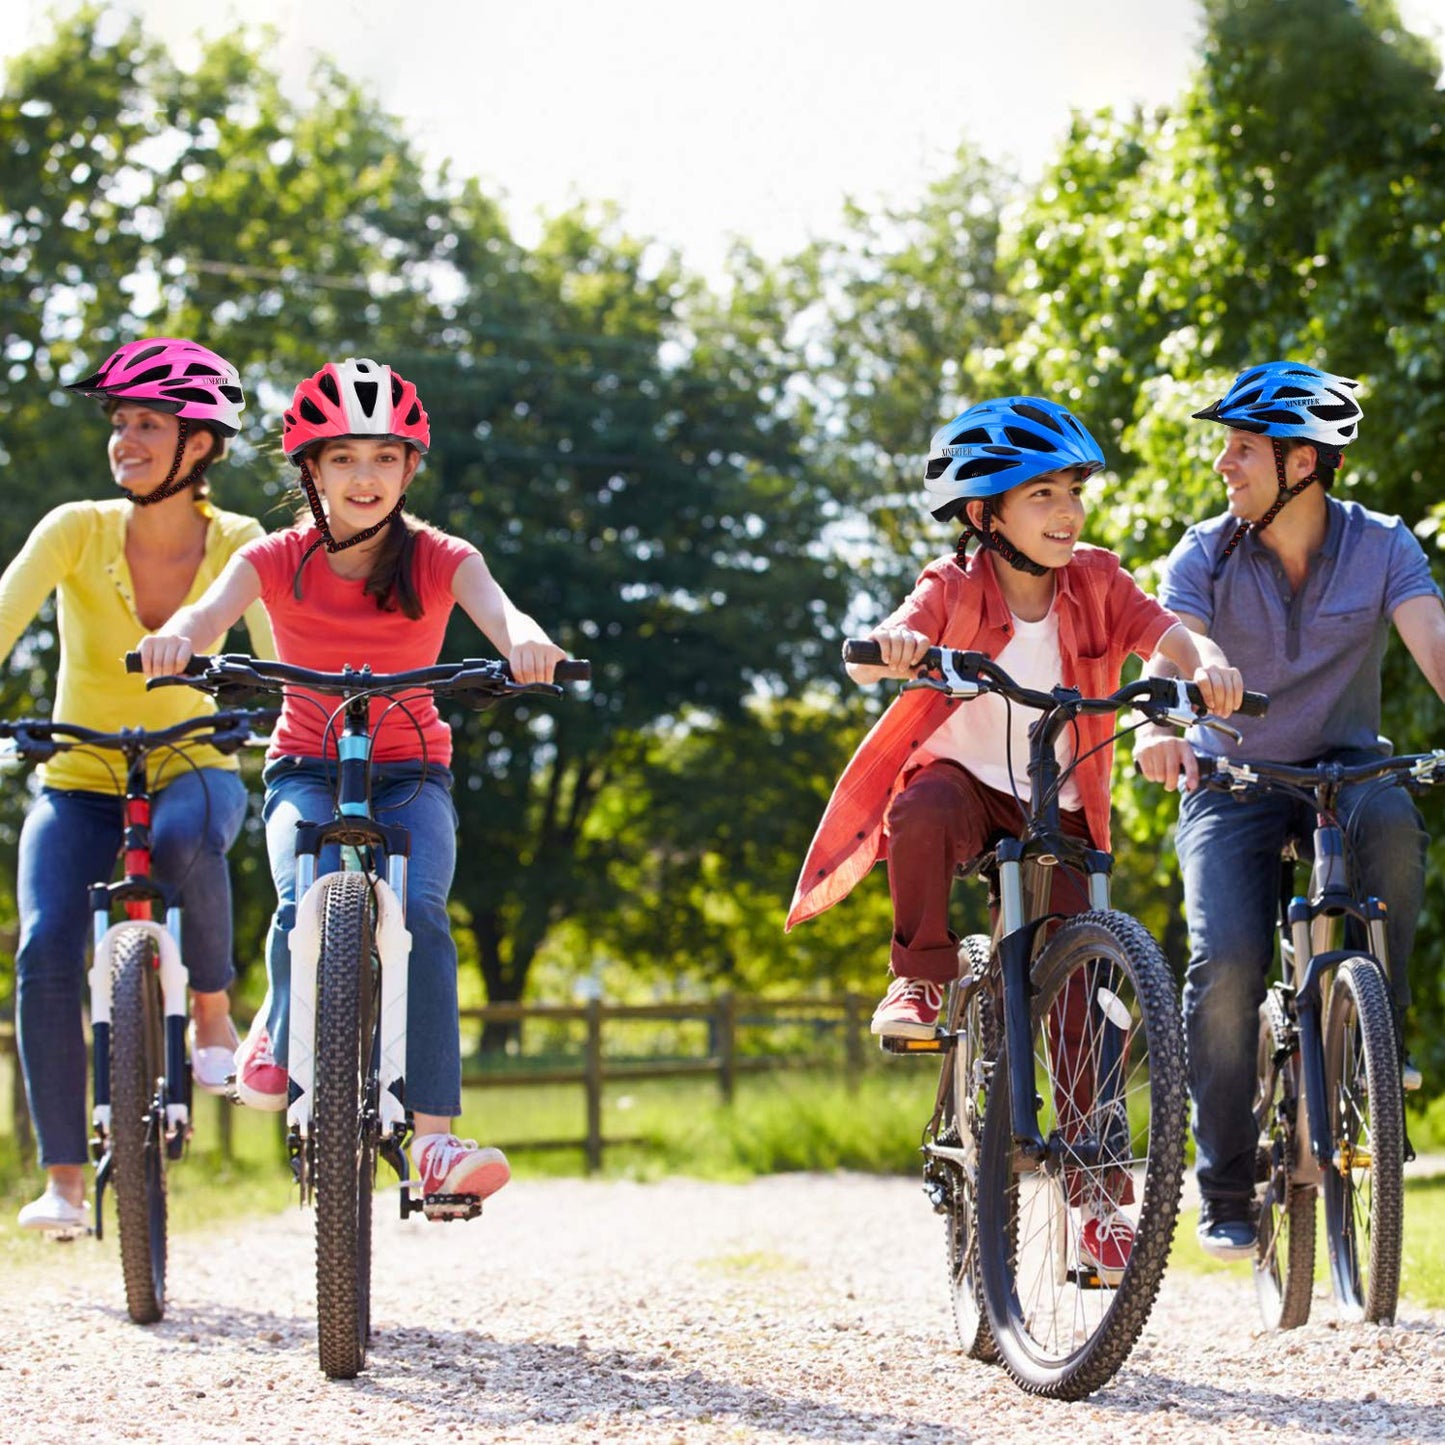 XINERTER Mountain bike helmet,Road Bicycle Helmet for Men Women with Removable Sun Visor,Adjustable Size Adult Cycling Helmets